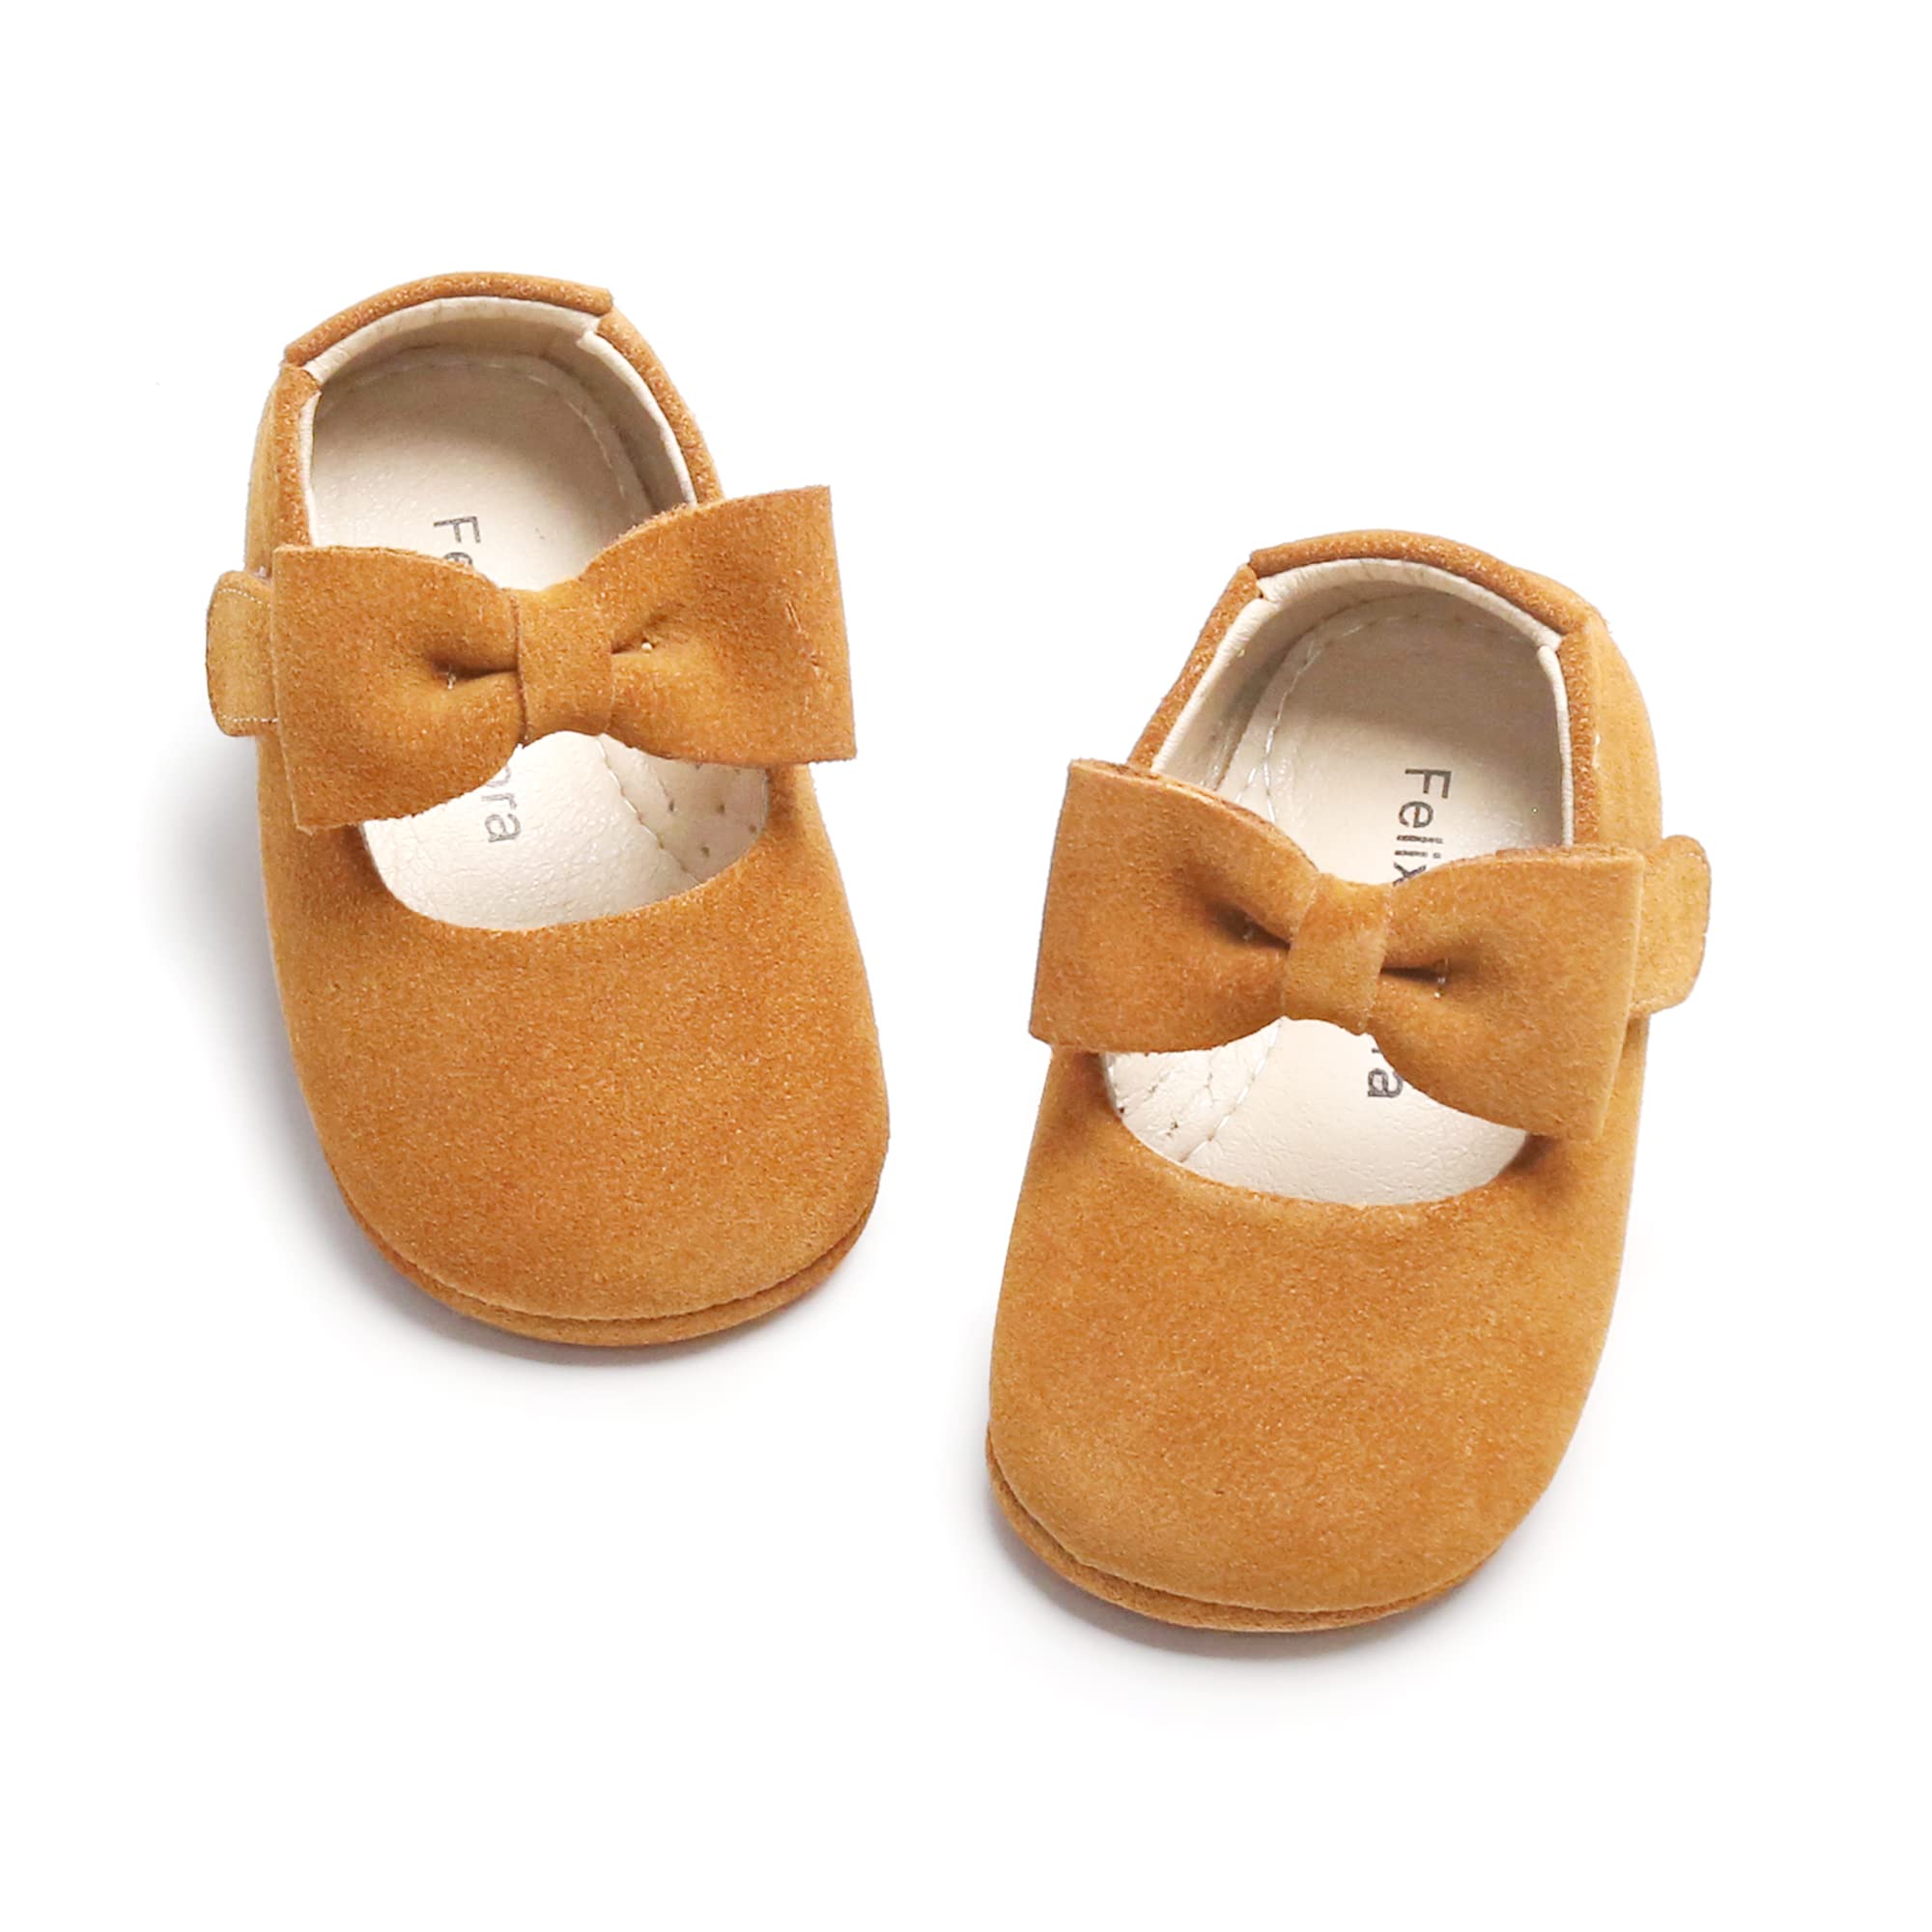 Felix Flora Felix  Flora Soft Sole Leather Baby Shoes - Infant Baby Walking Shoes Moccasinss Rubber Sole Crib Shoes(Brown,9-12 Months Infant